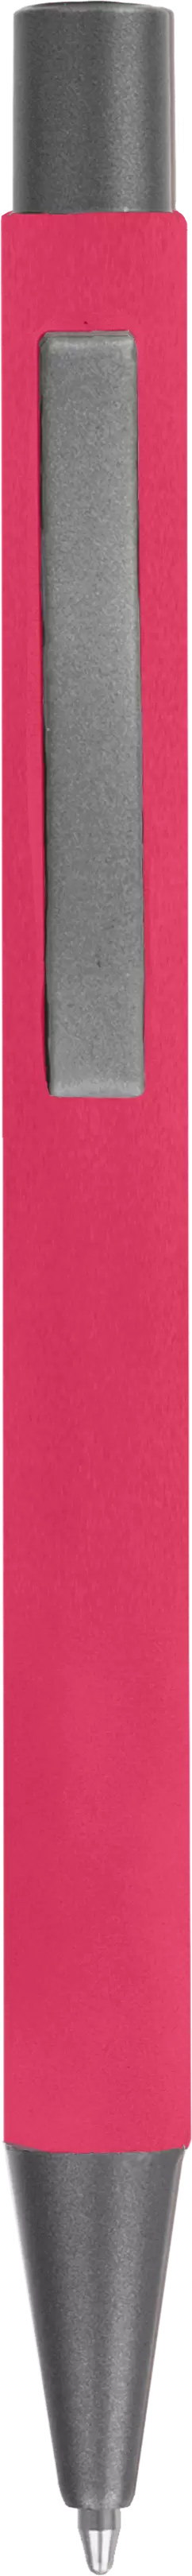 Ручка MAX SOFT TITAN Красная 1110-03S